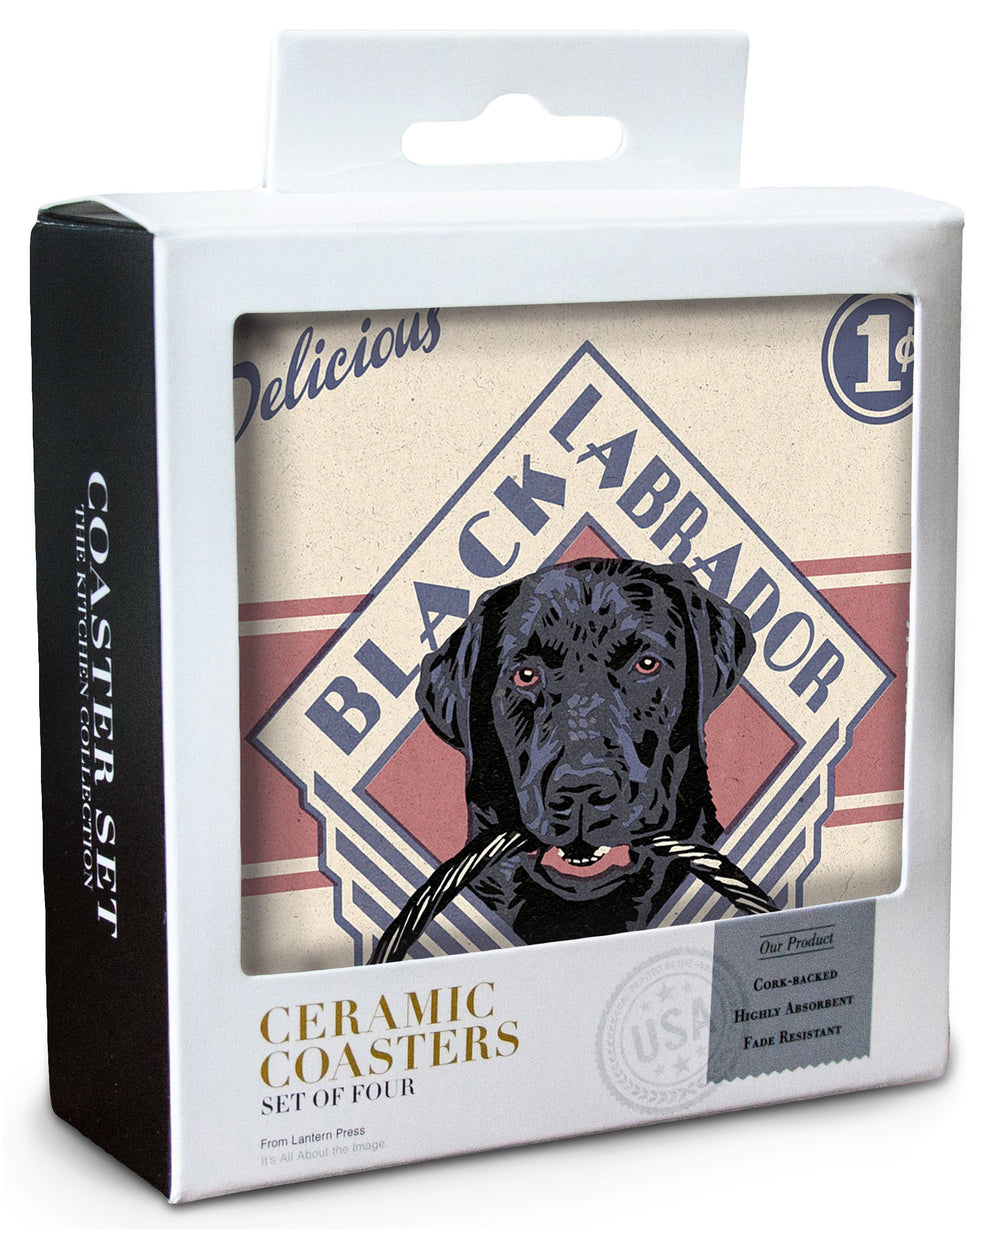 Black Labrador, Retro Black Licorice Ad, Lantern Press Artwork, Coaster Set Coasters Lantern Press 